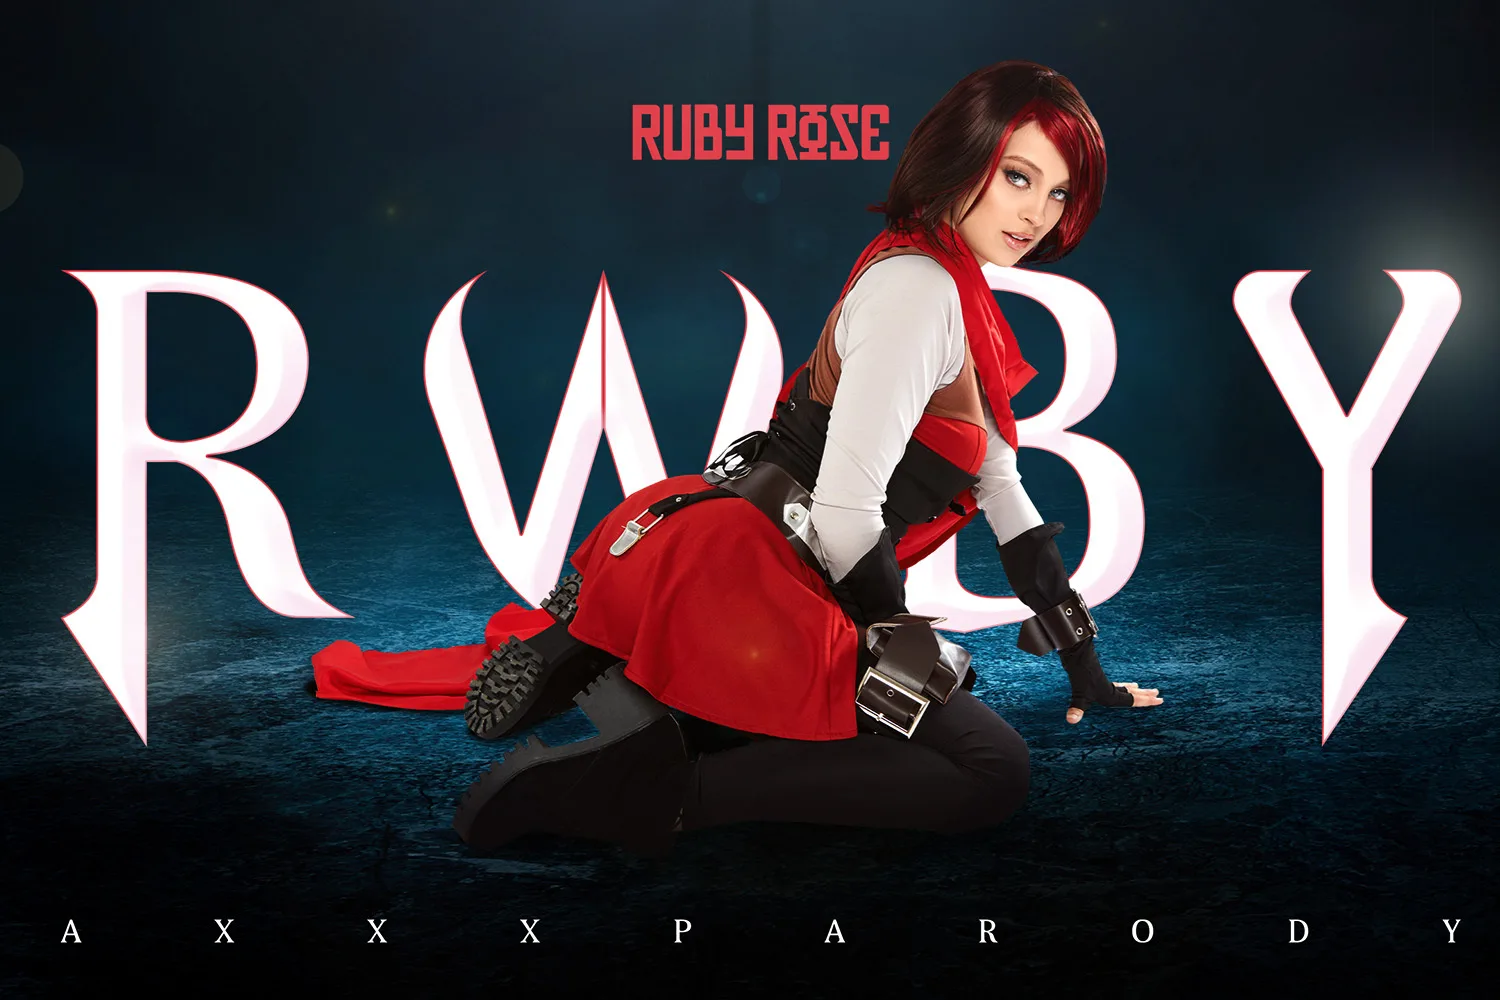 [2021-10-21] RWBY: Ruby Rose A XXX Parody - VRCosplayX